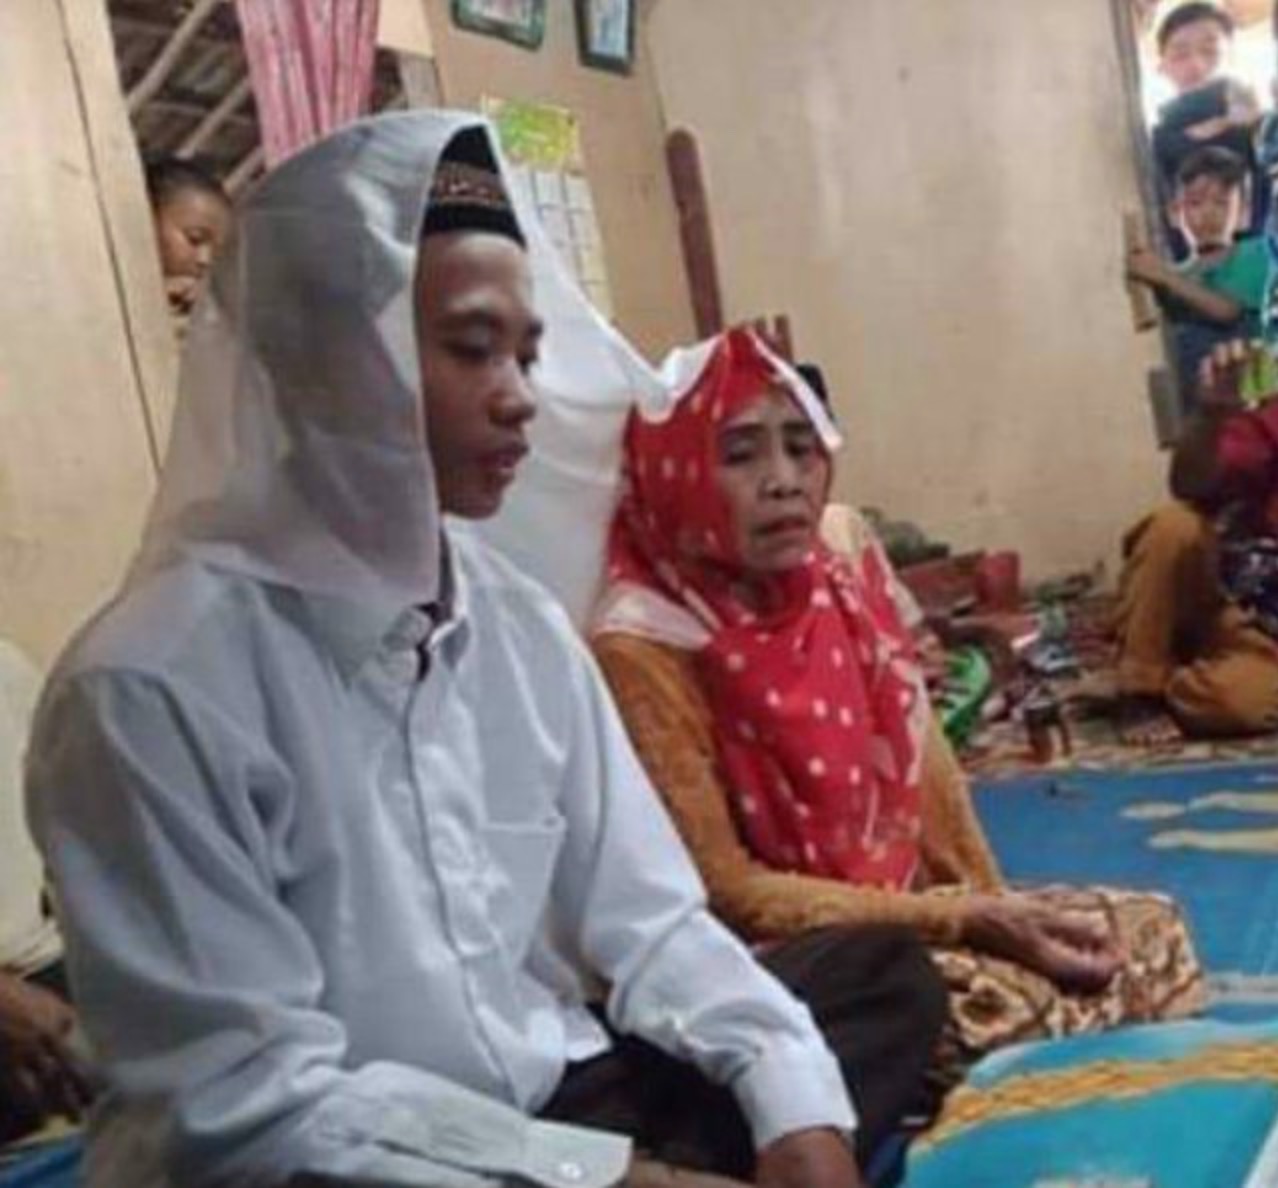 nangtime.com - 'Atas dasar suka sama suka' - Nenek 65 Tahun Mengahwini Pemuda 24 Tahun